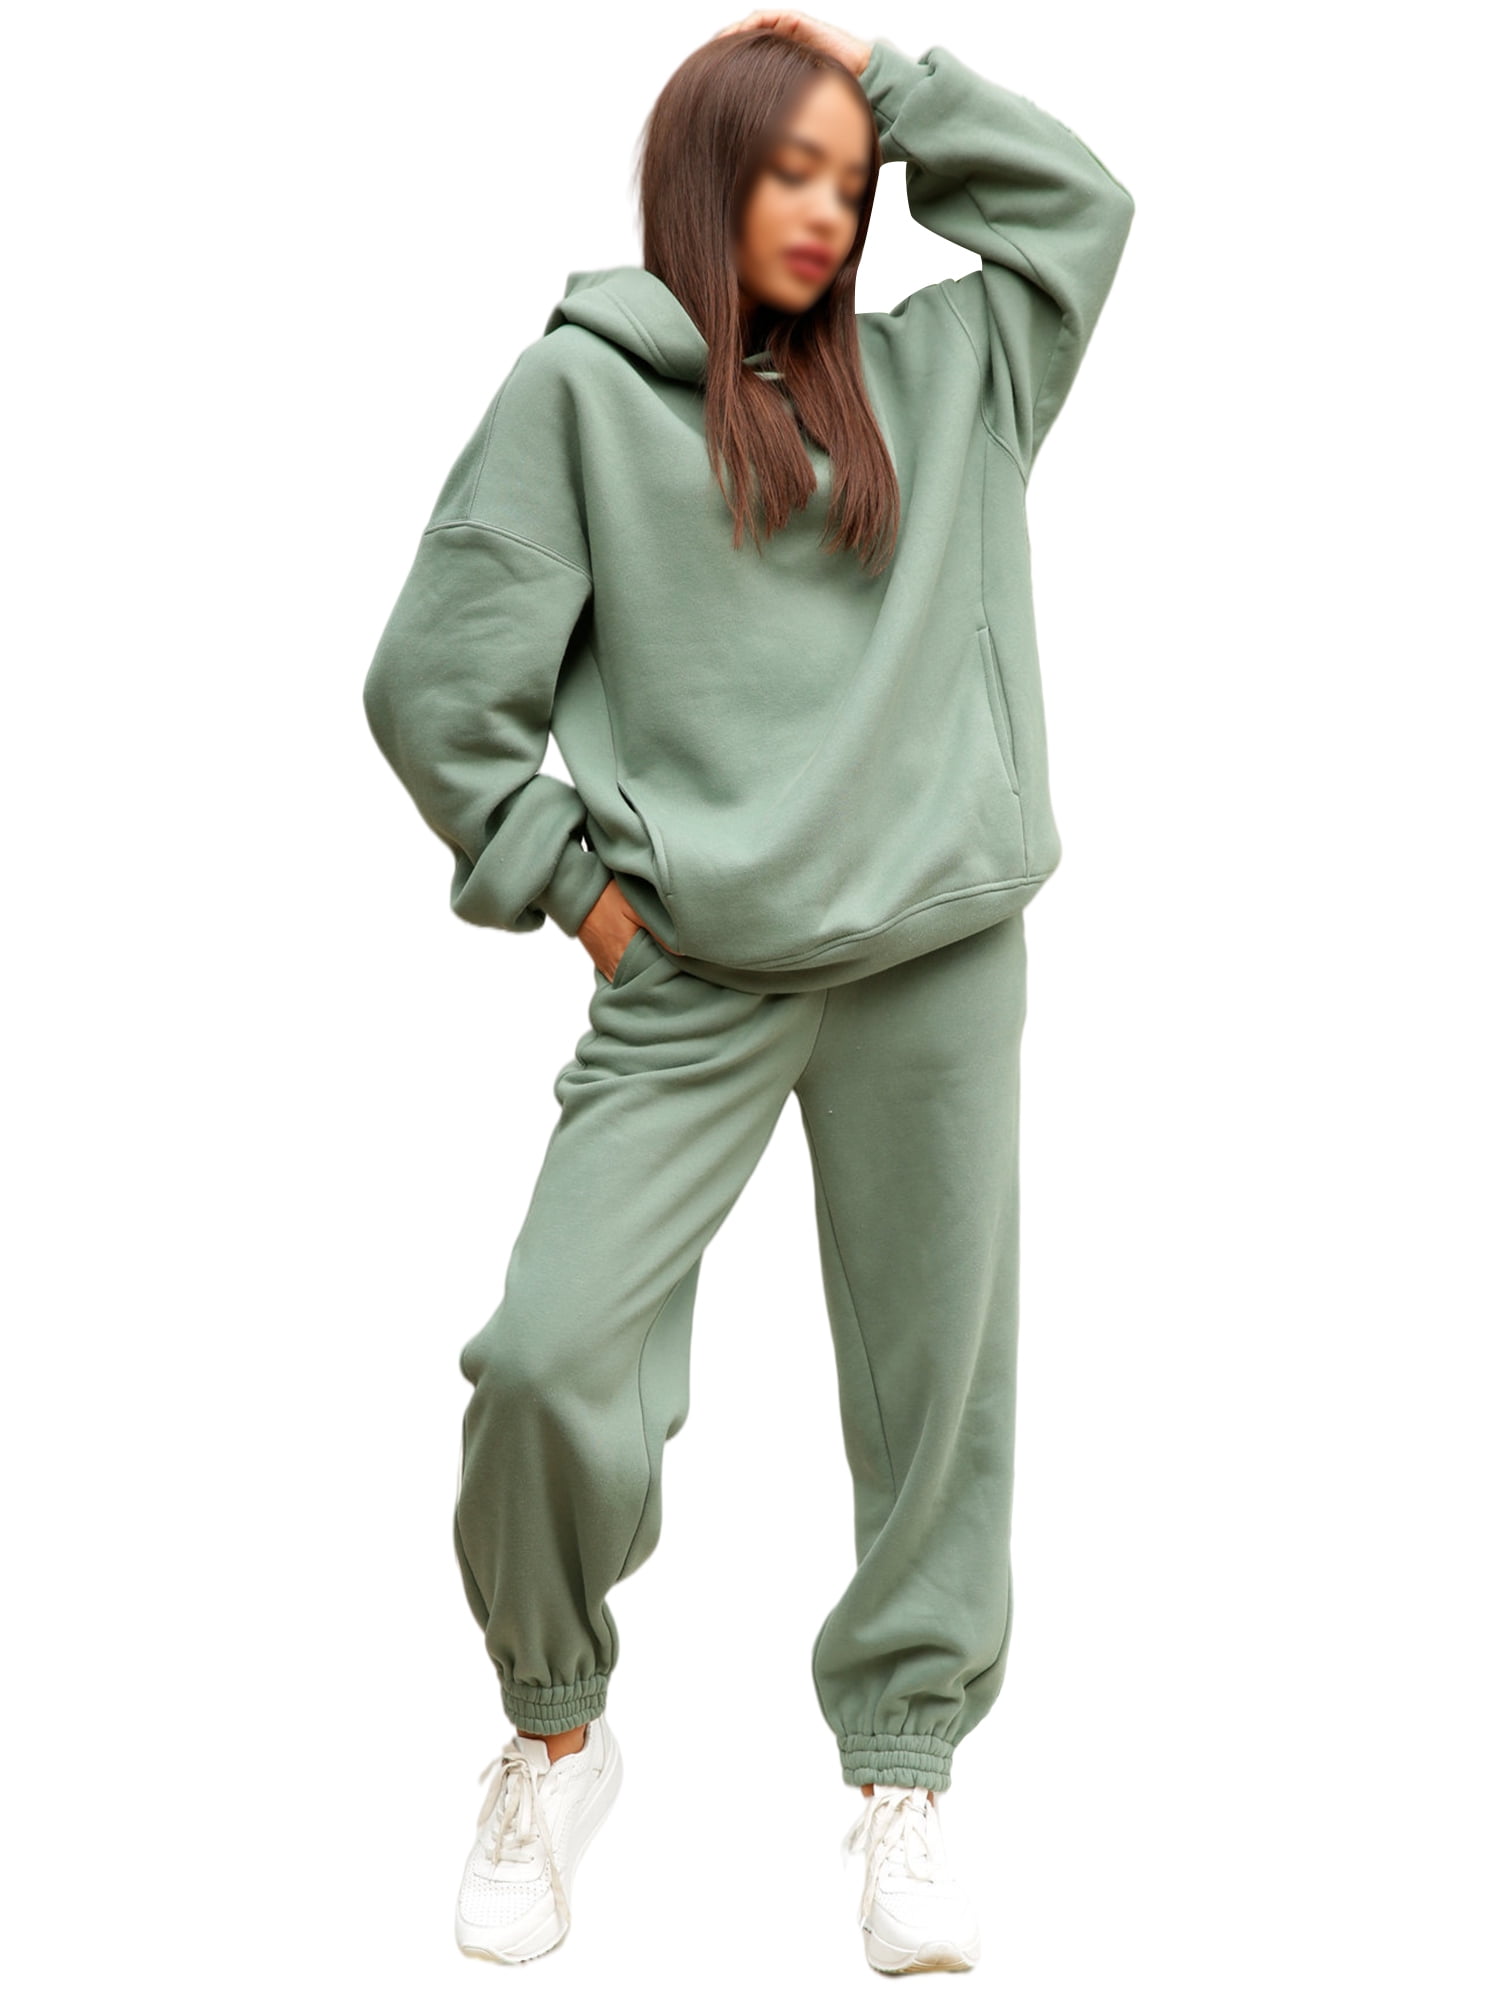 Linsery Women Hoodies Sweatsuit Long Sleeve Hooded Matching Joggers Sweatpants 2 Piece Tracksuit Sets